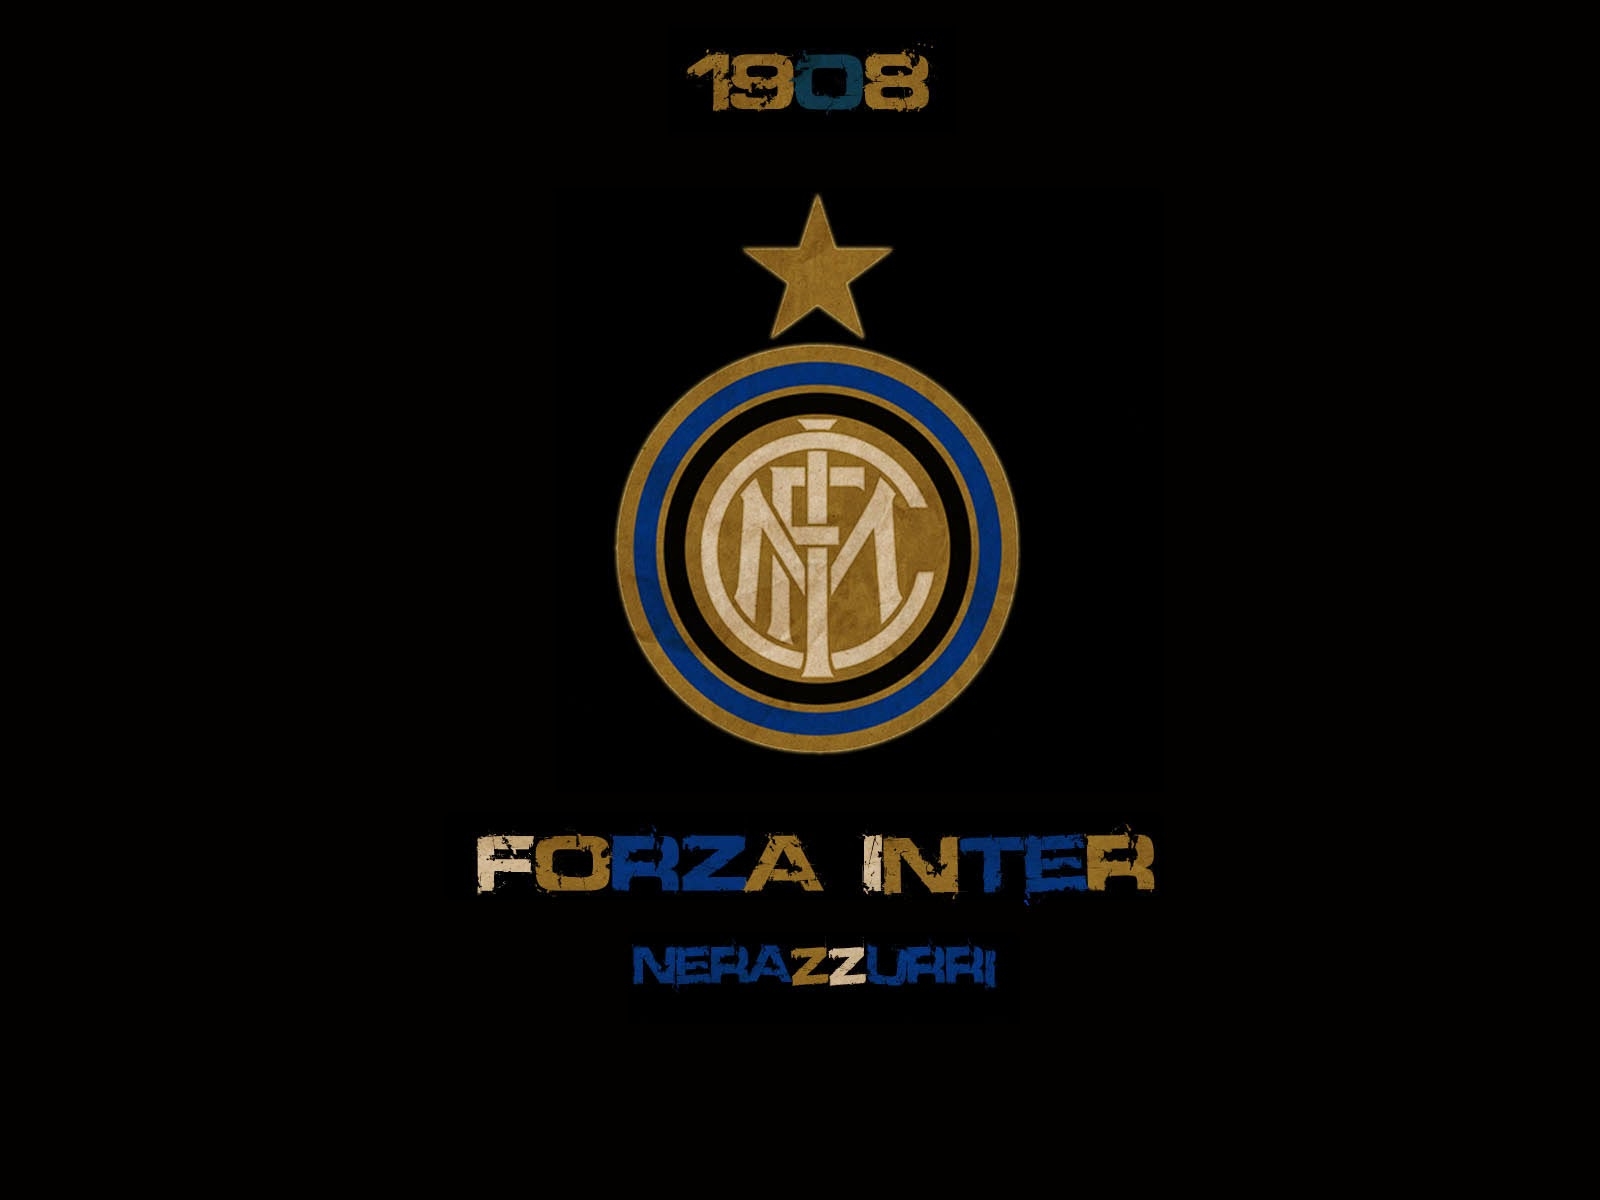 Wallpaper Inter Milan Ukuran Besar - Inter Milan Logo 3d - HD Wallpaper 